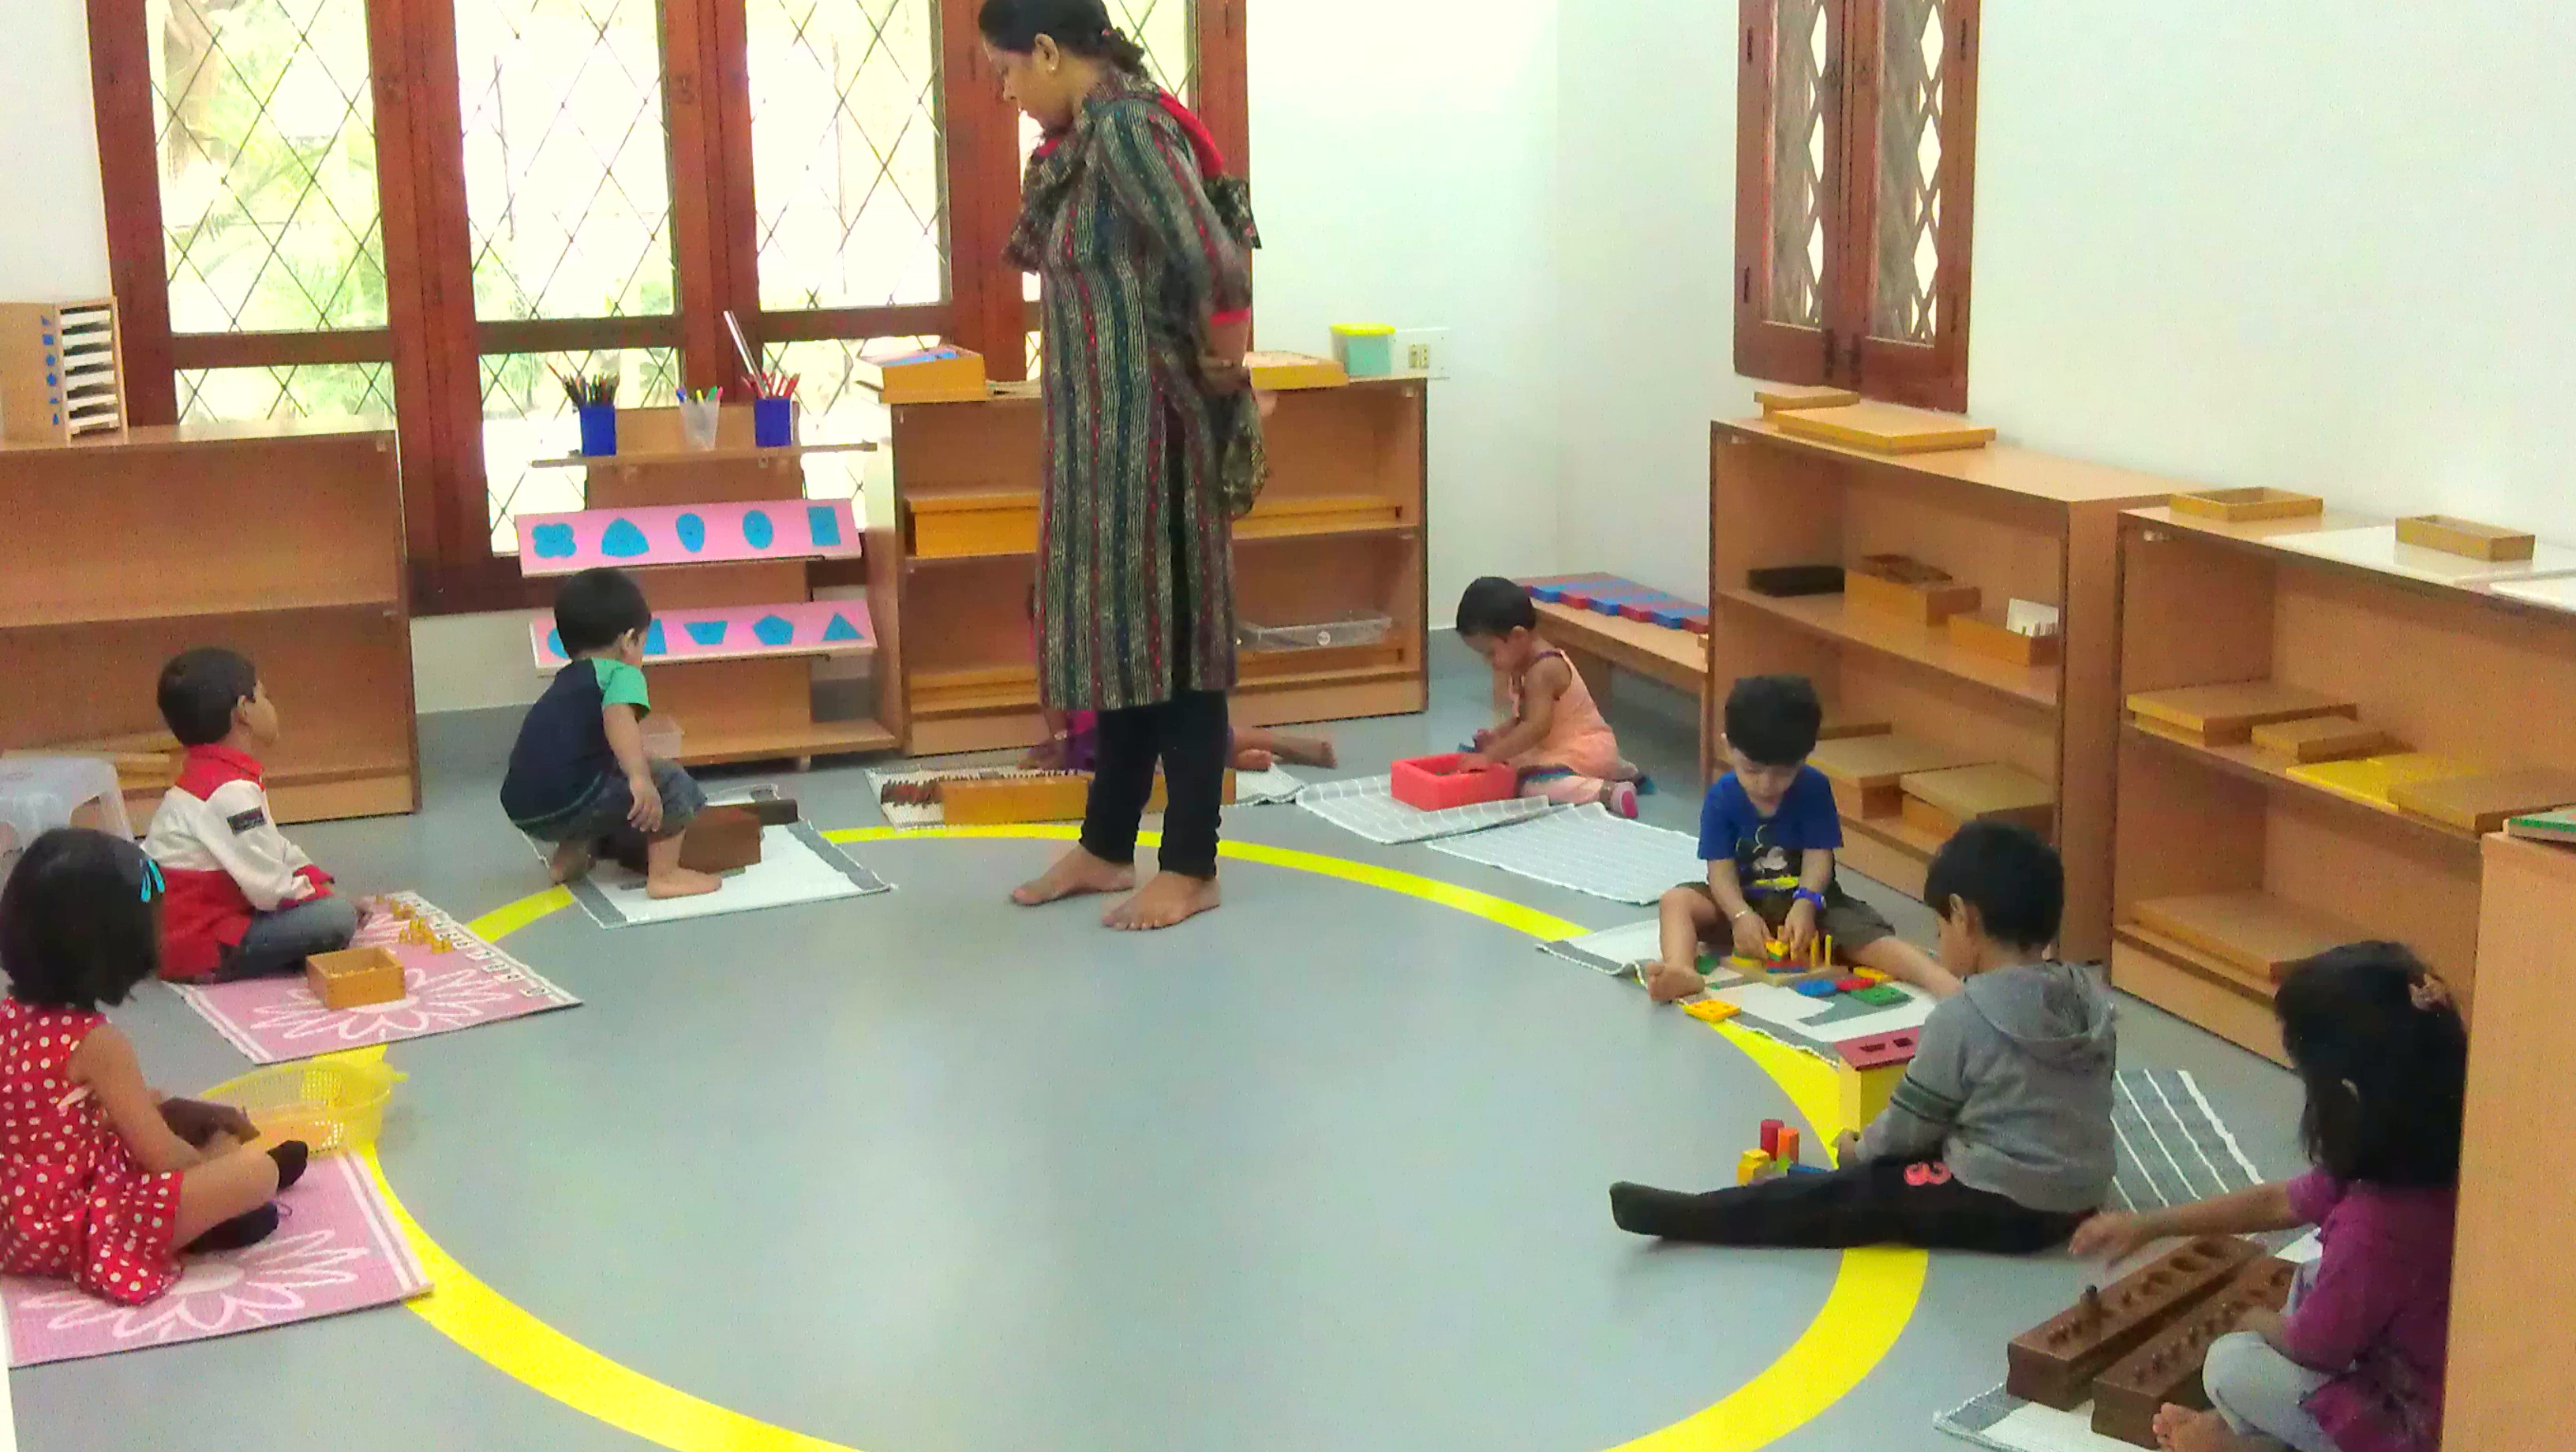 Montessori method is for pre school children only